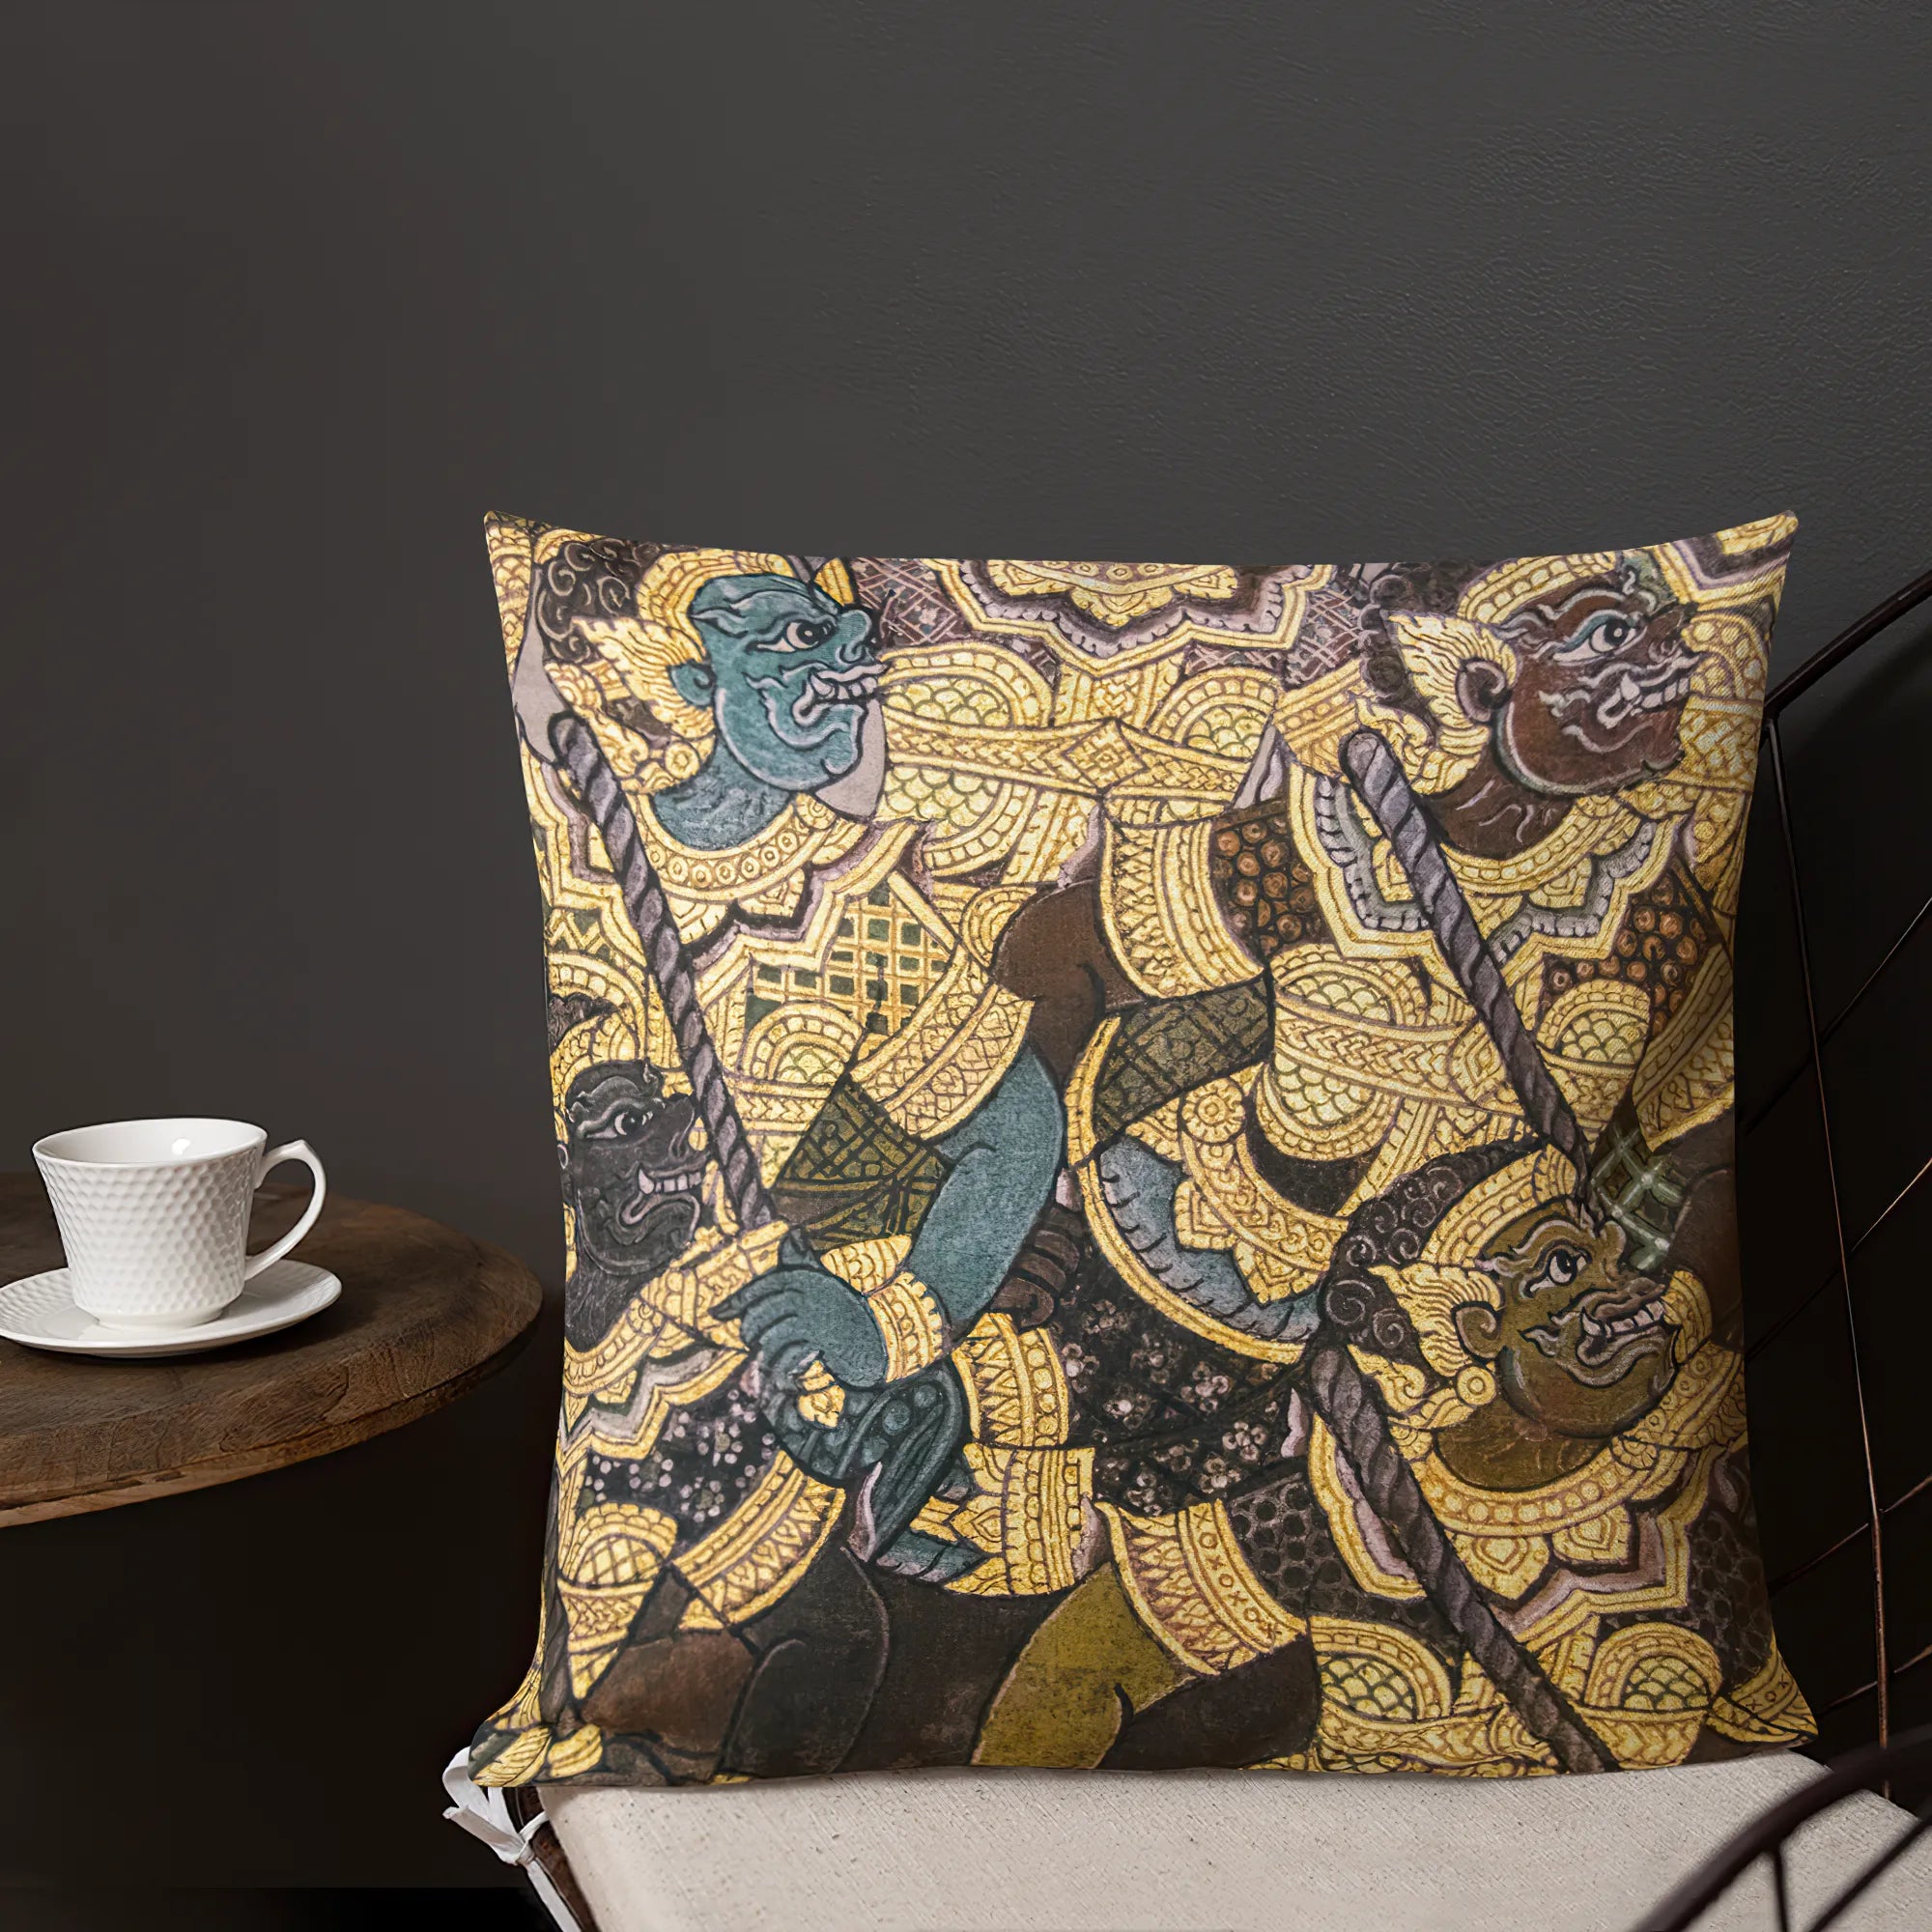 Action Men Cushion - Decorative Throw Pillow - Throw Pillows - Aesthetic Art